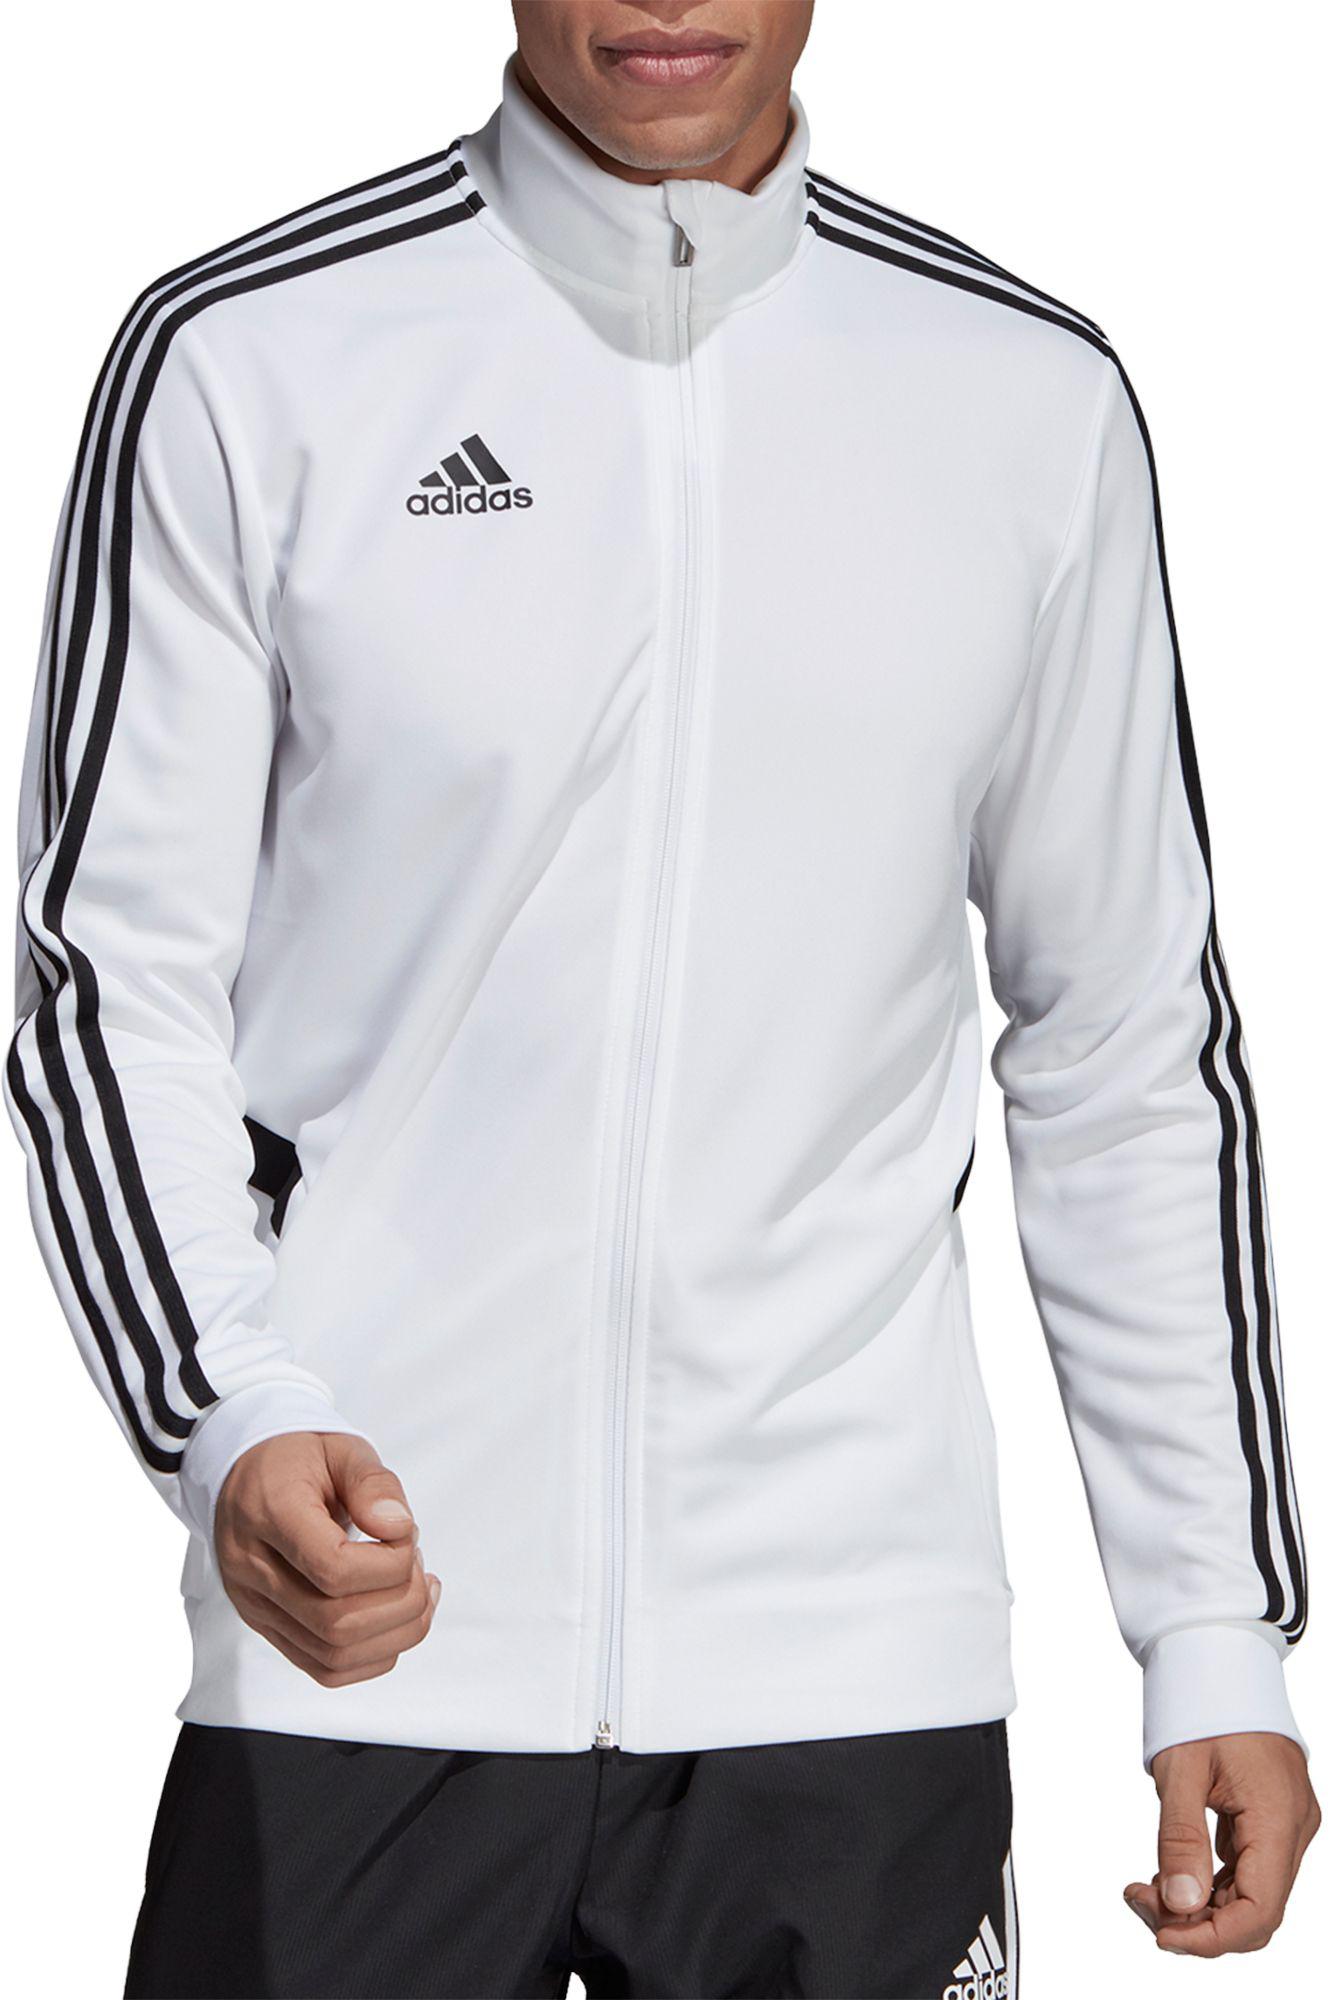 adidas Synthetic Tiro 19 Soccer Training Jacket in White for Men - Lyst